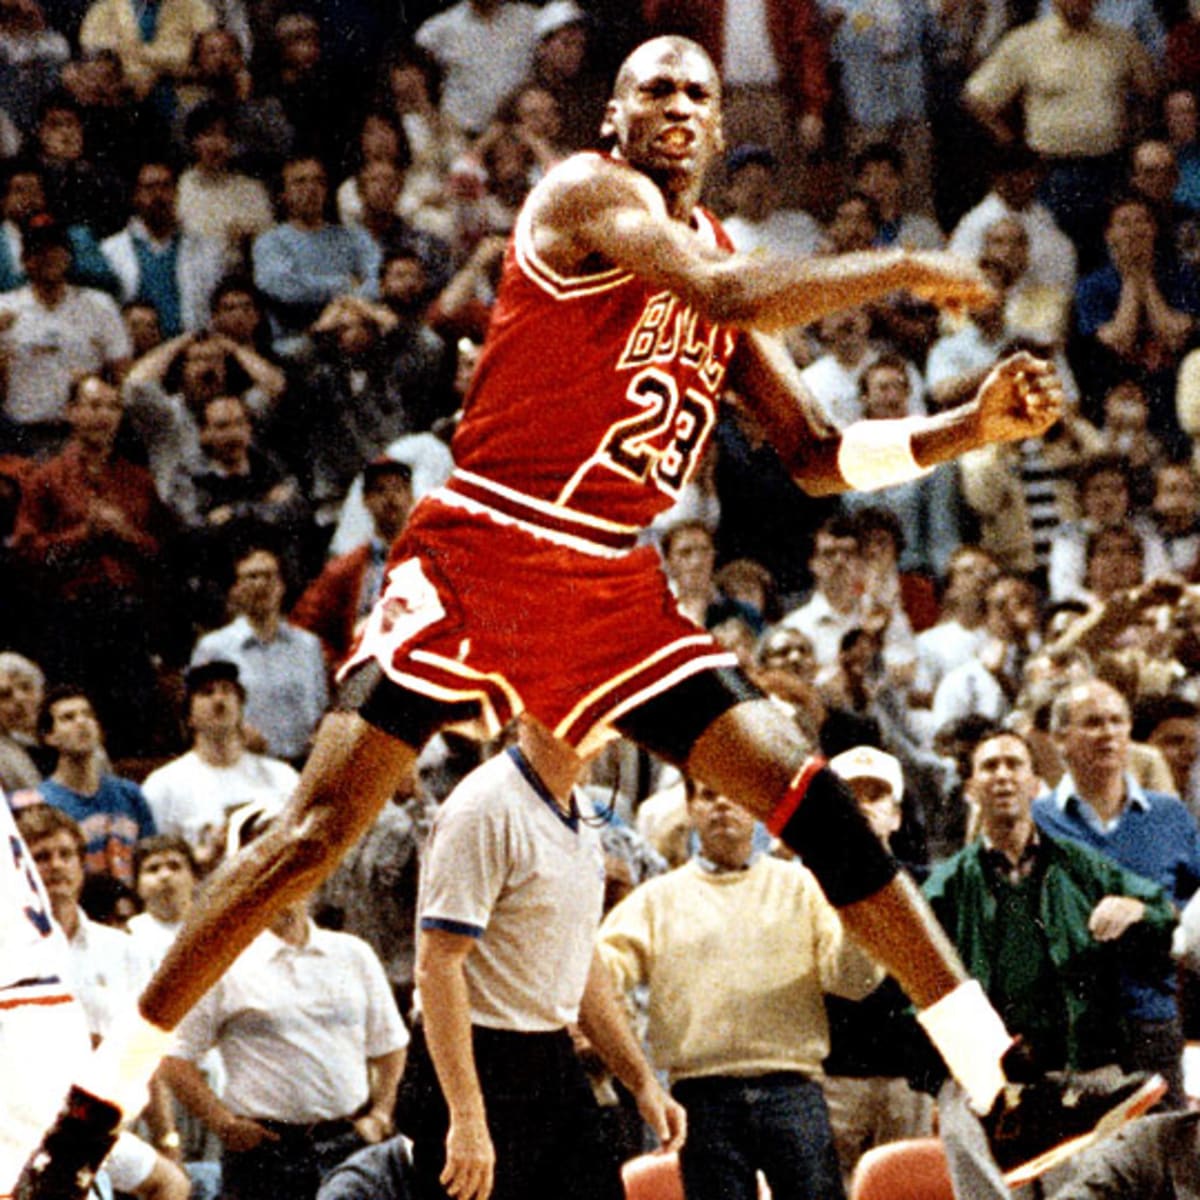 Michael Jordan hit The Shot over Craig 